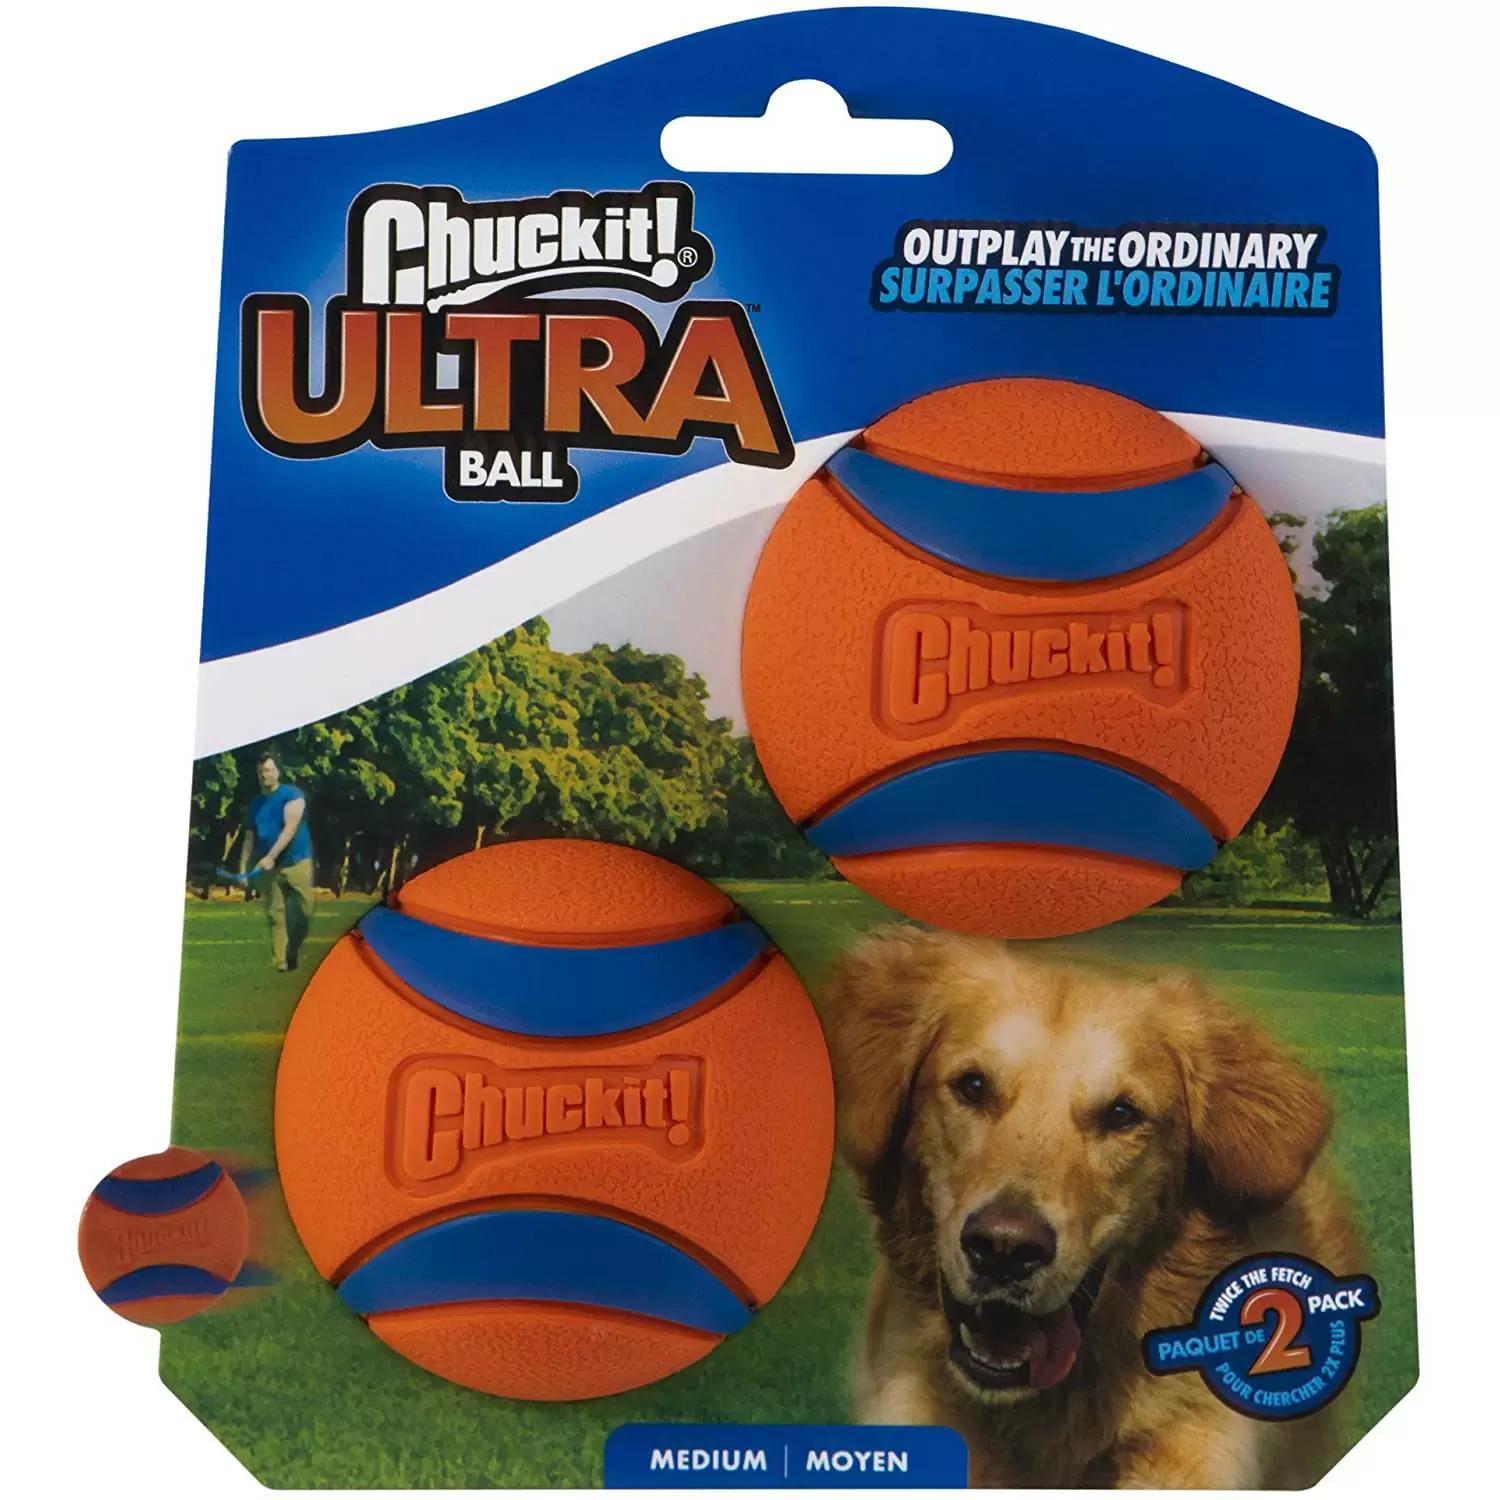 2 Chuckit Ultra Balls for $3.89